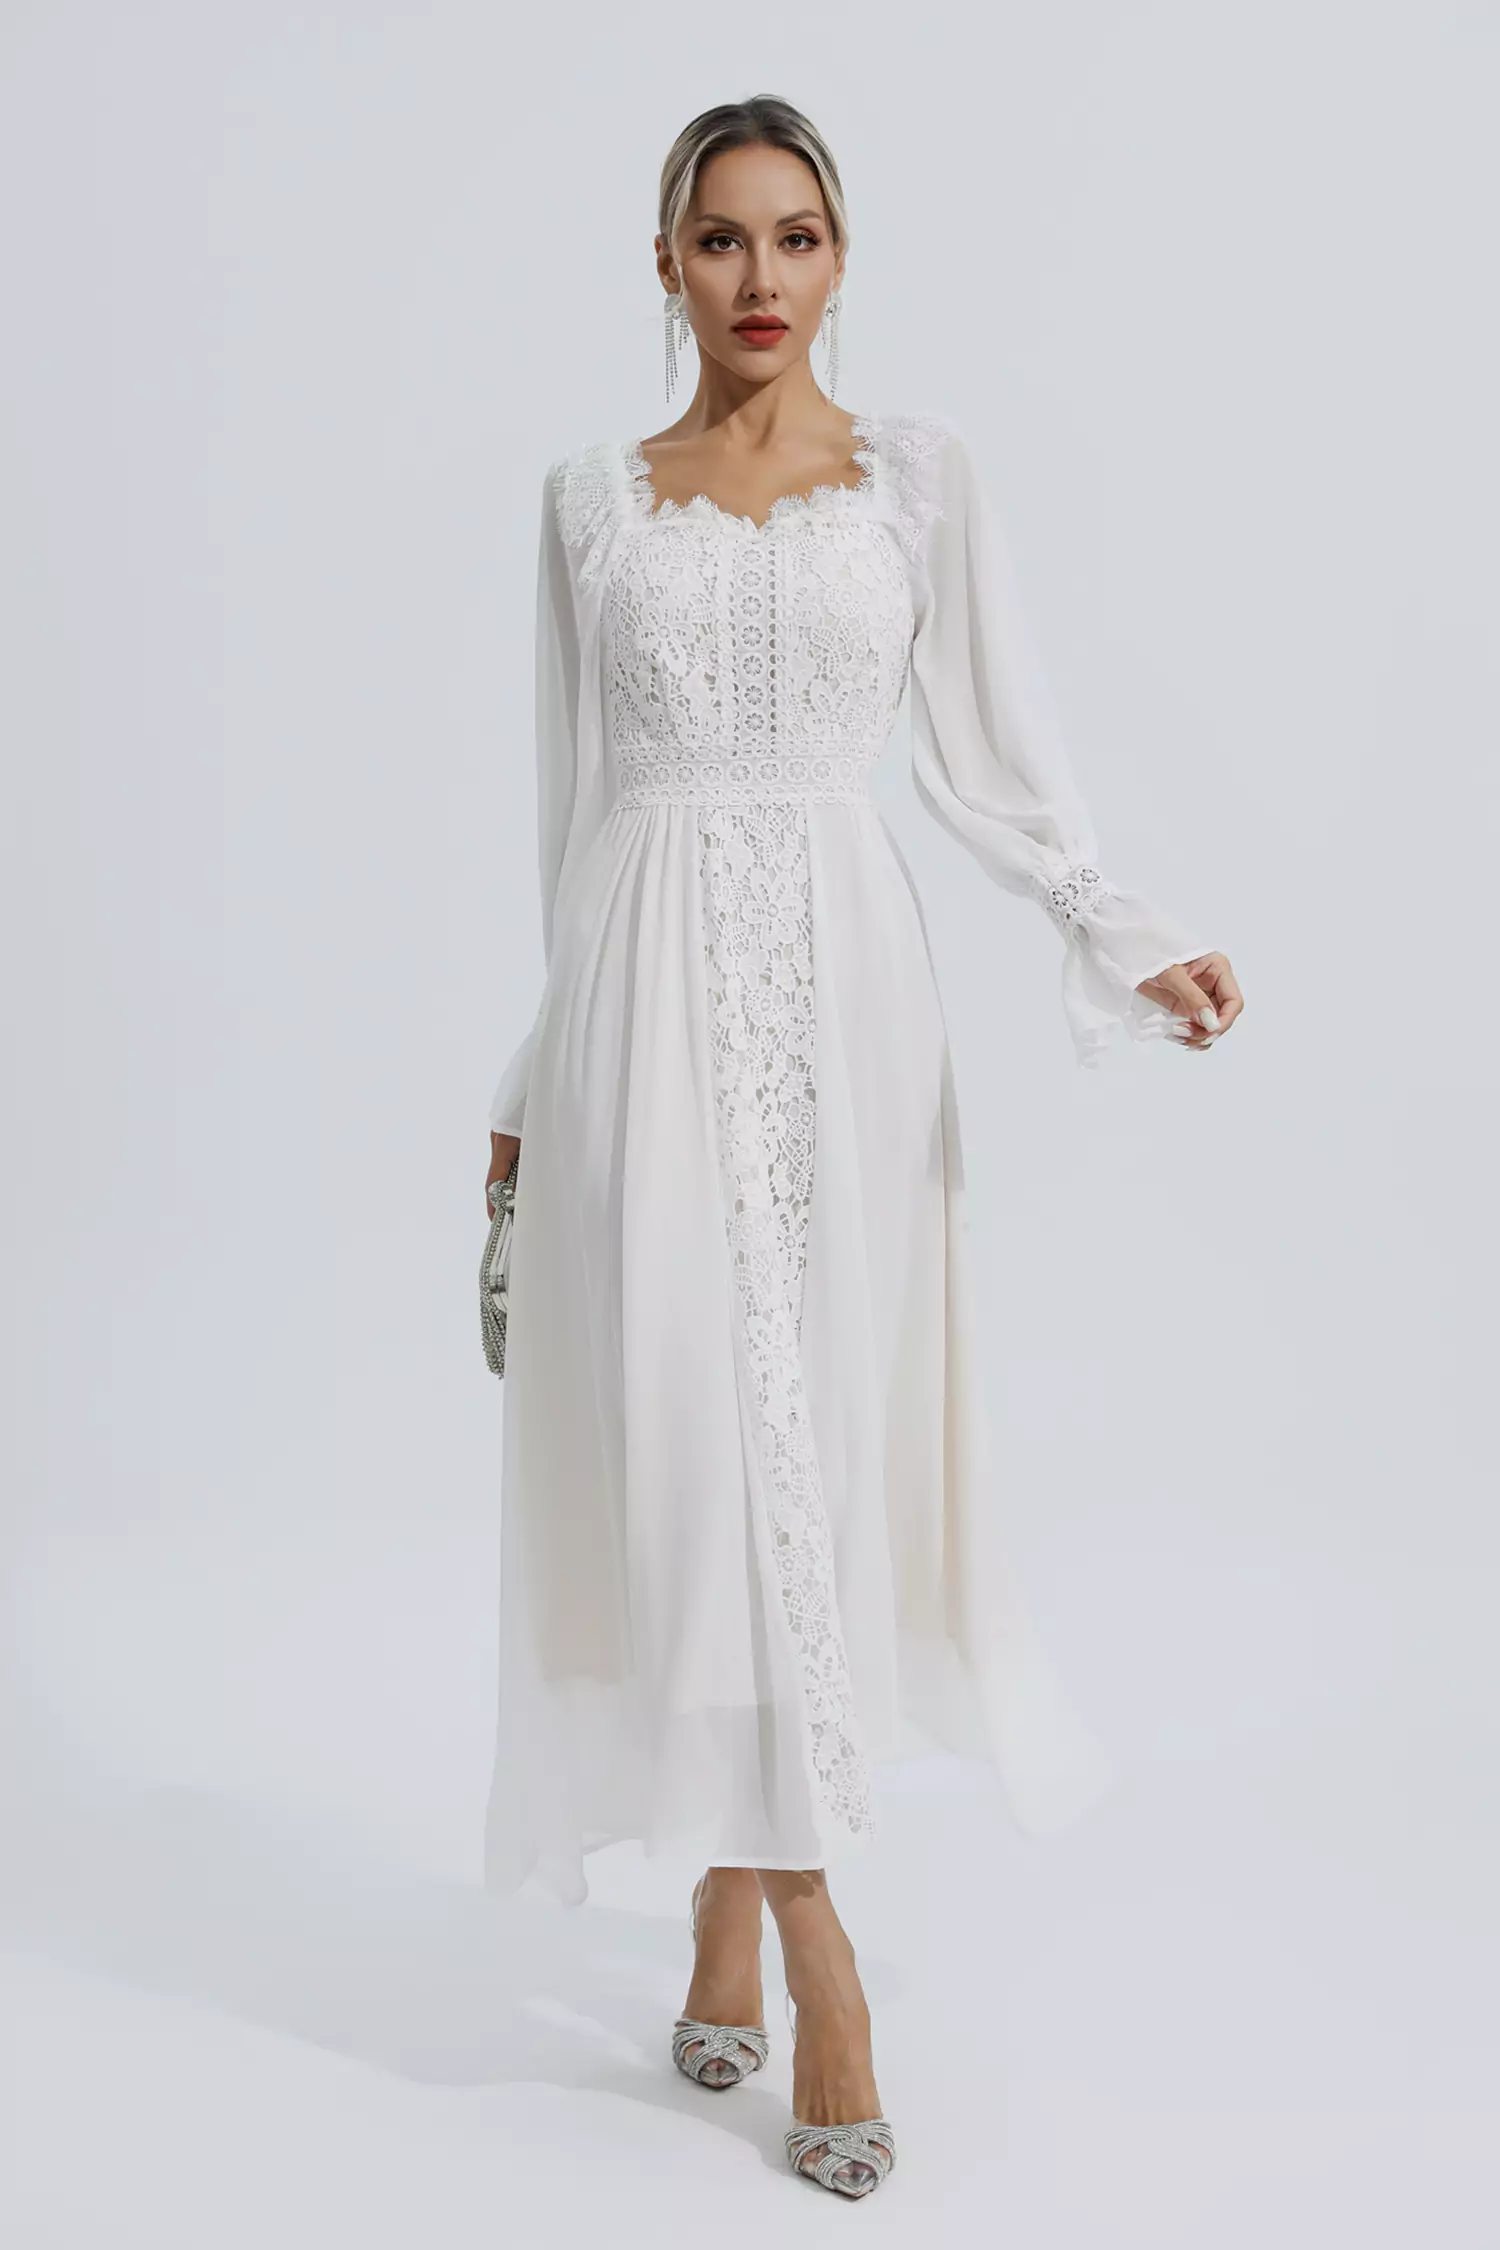 Aliana White Floral Hollow Long Sleeve Dress